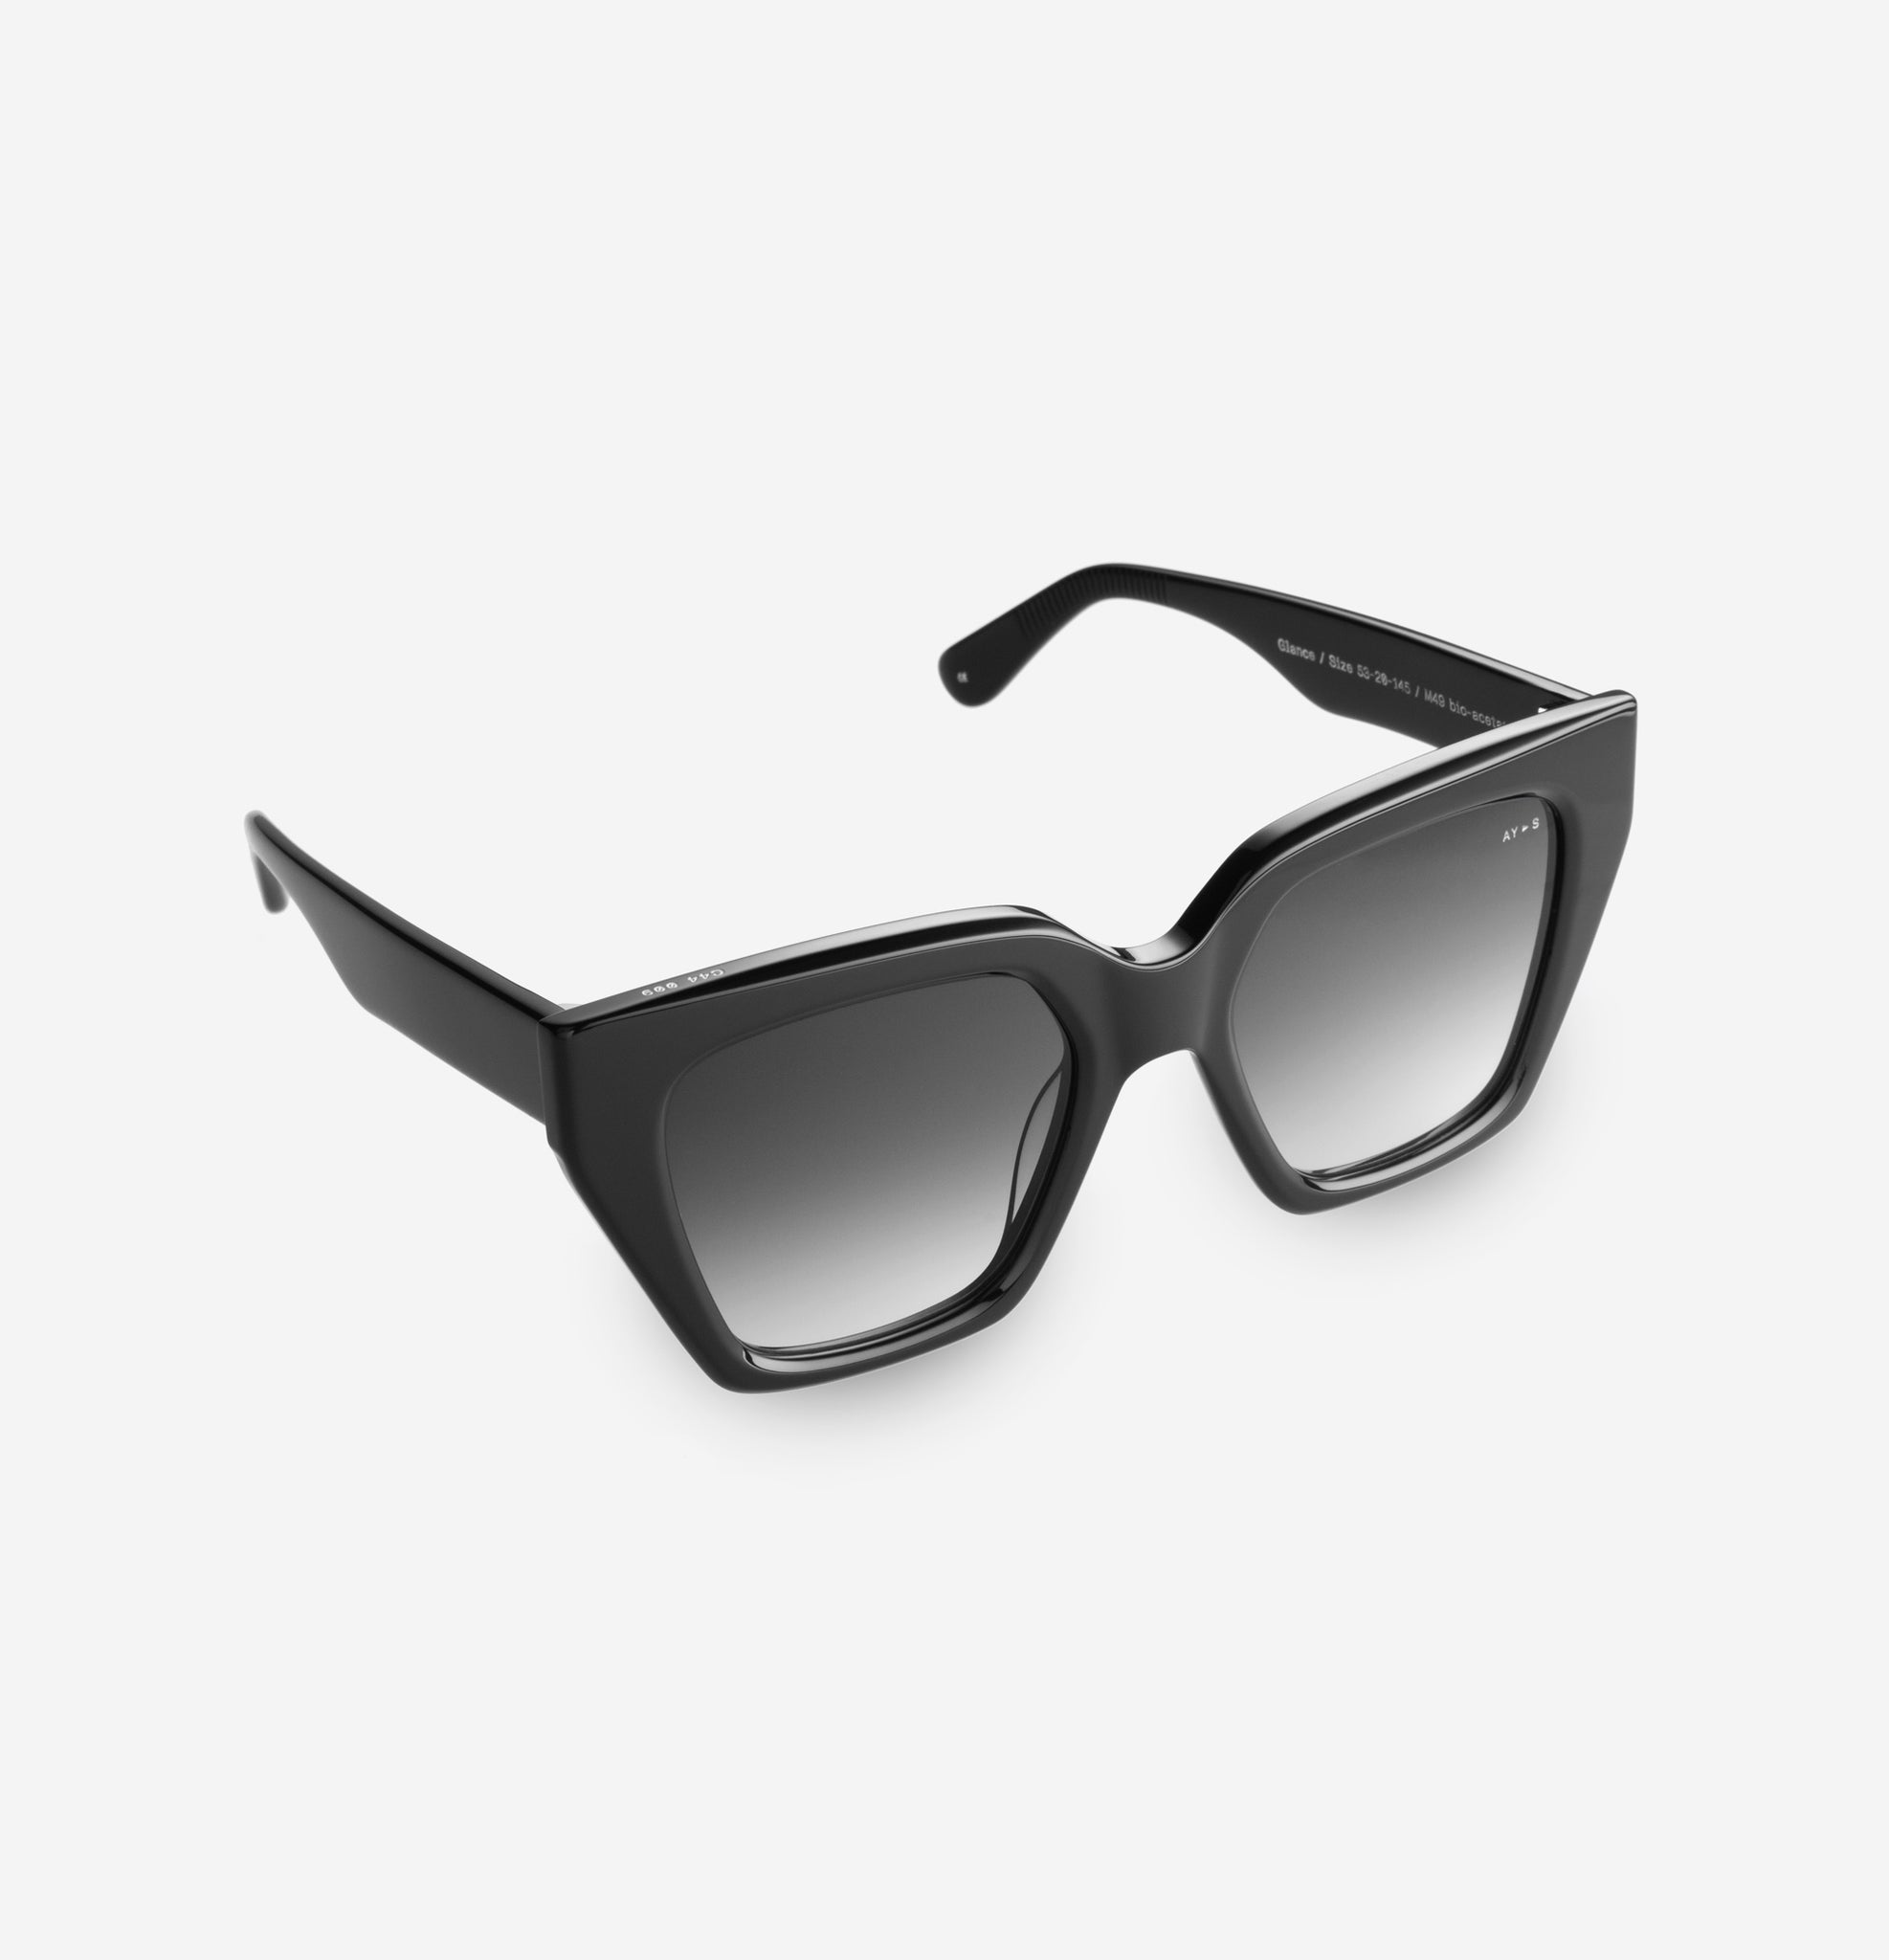 James Ay - Glance Sunglasses